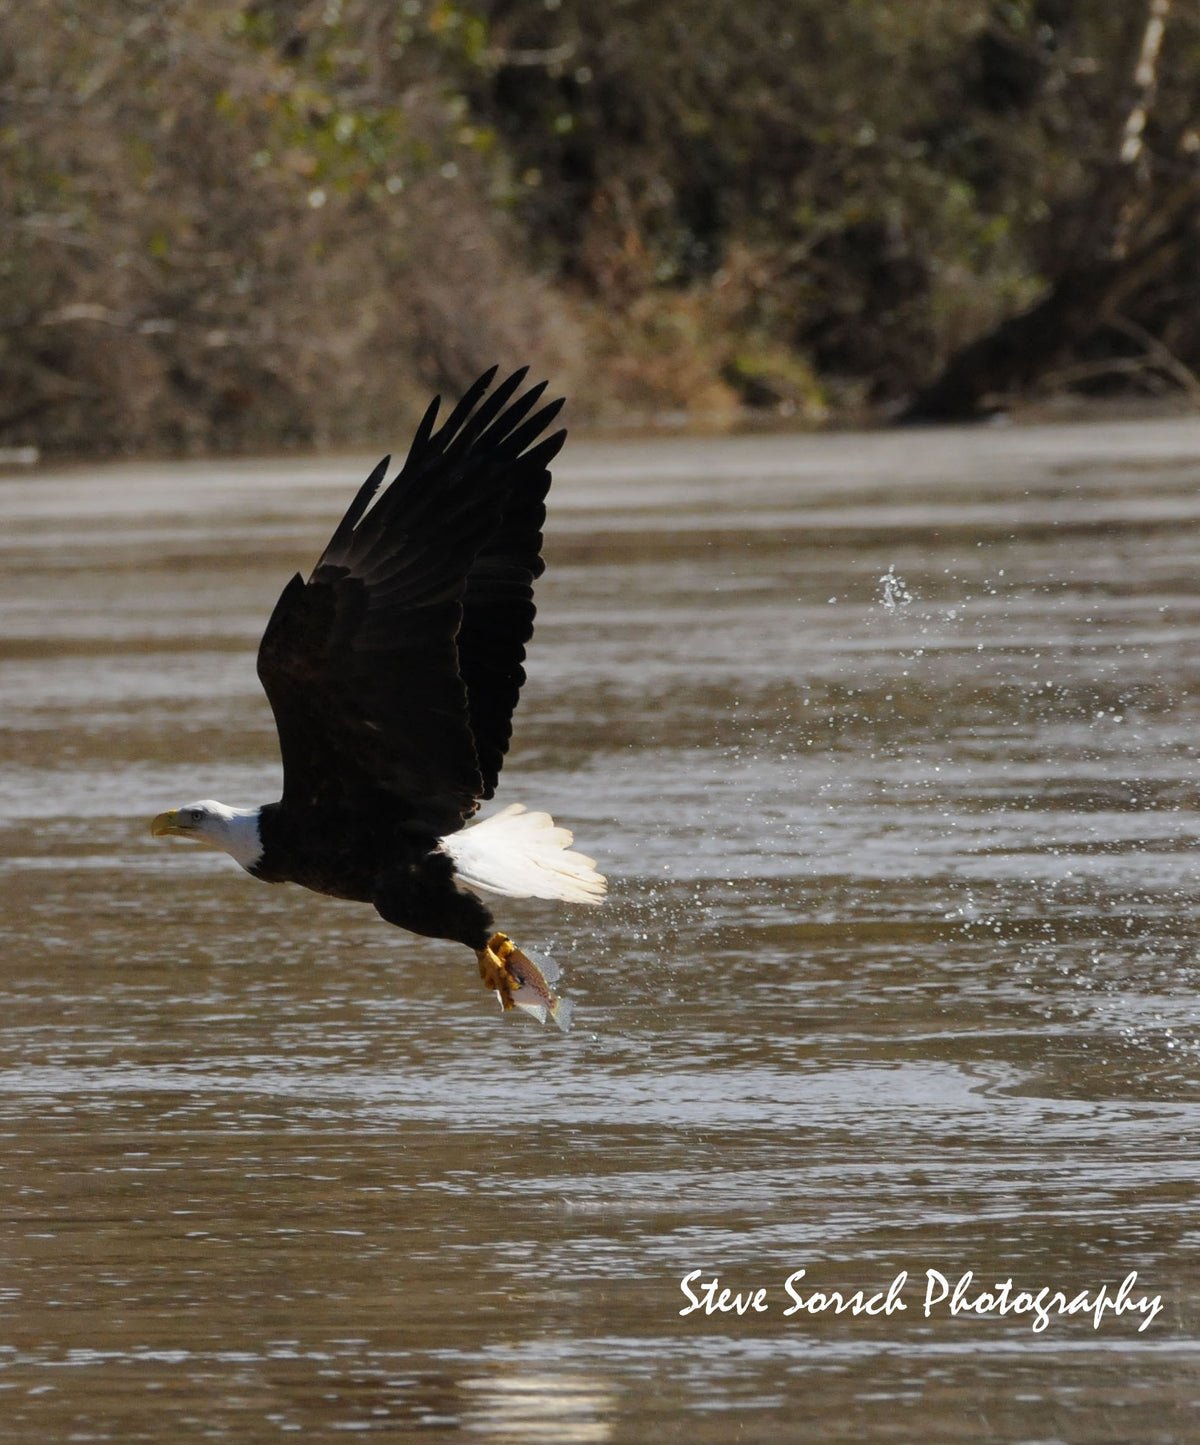 Sorsch Photography - Bald Eagle Catching Fish (Vertical)